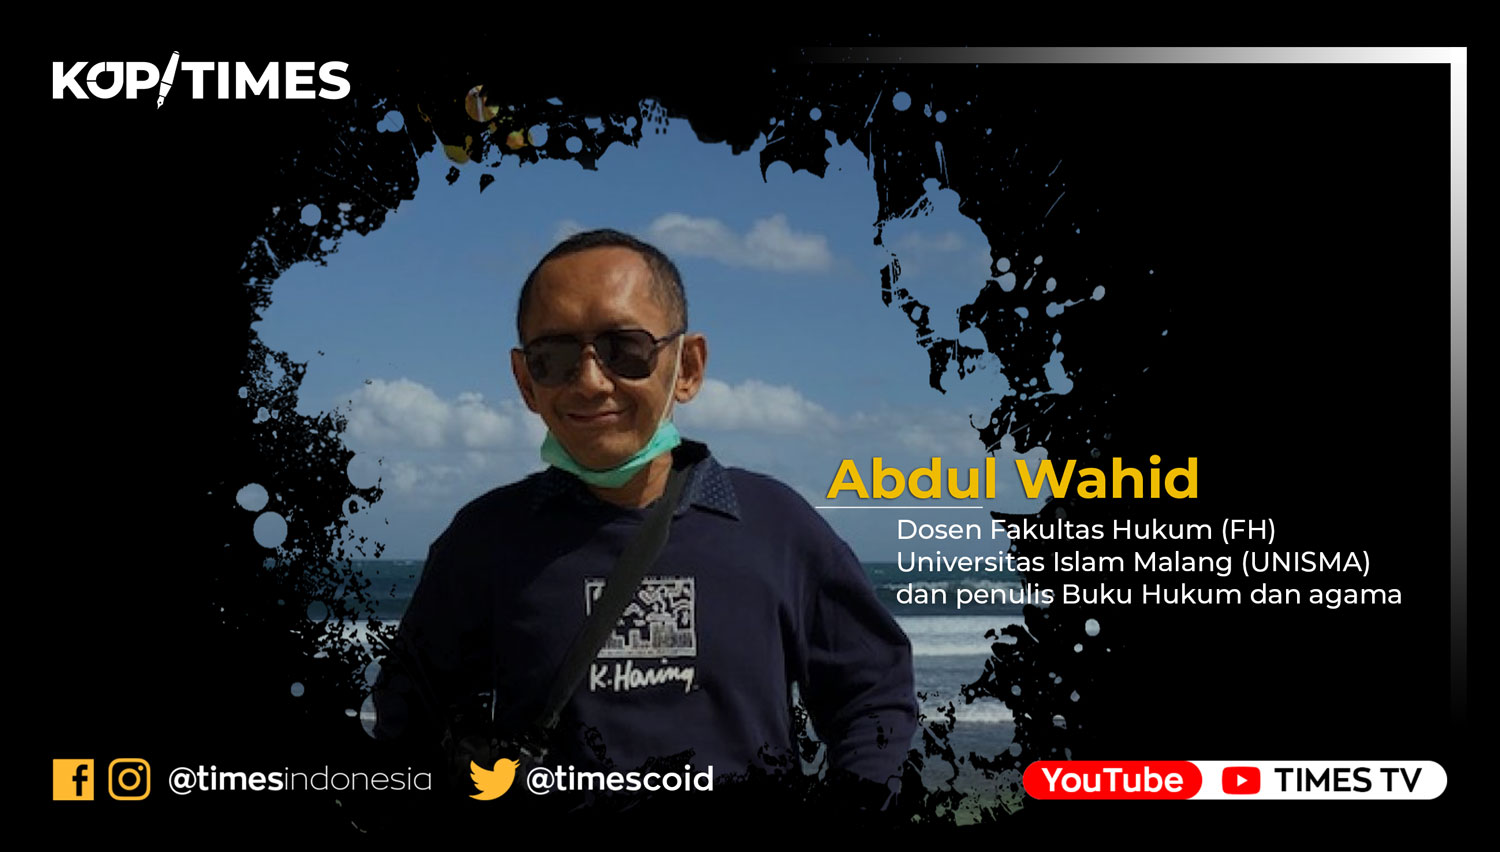 Abdul Wahid, Dosen Program Pascasarjana Universitas Islam Malang (UNISMA), penulis buku  dan PP HTN/HAN.